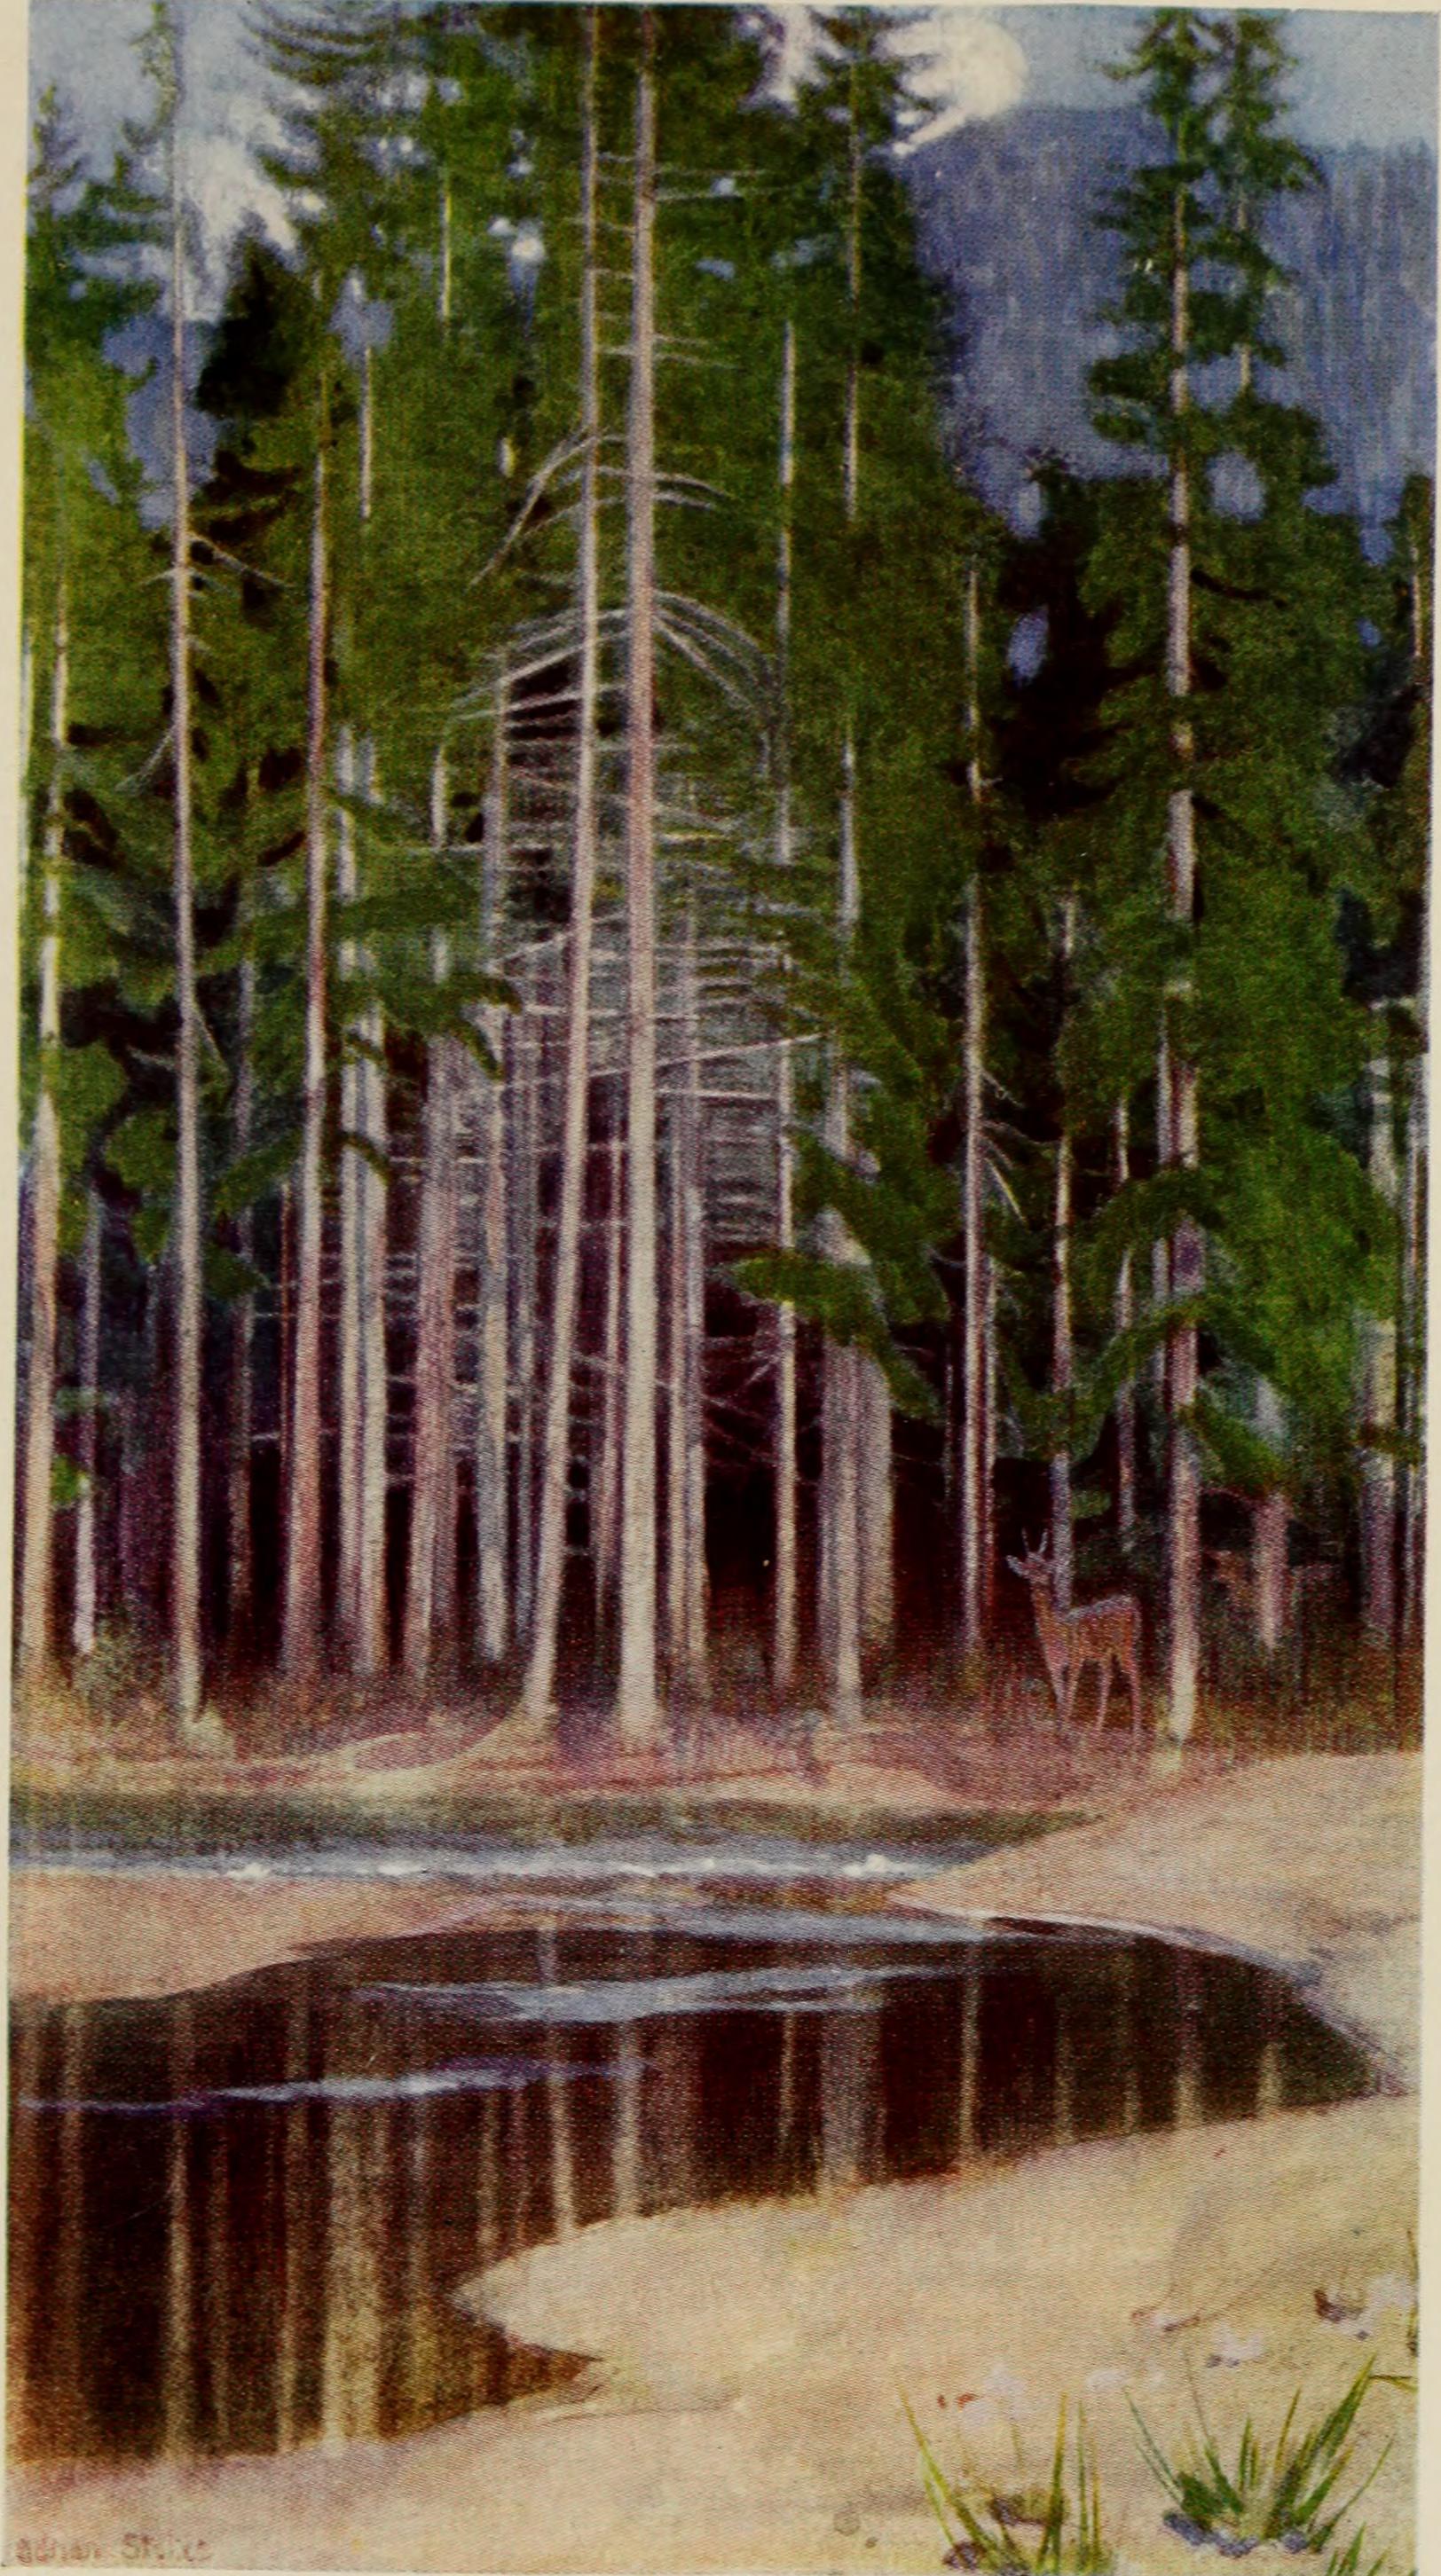 Artwork of pine trees, deer, and river in Hungary